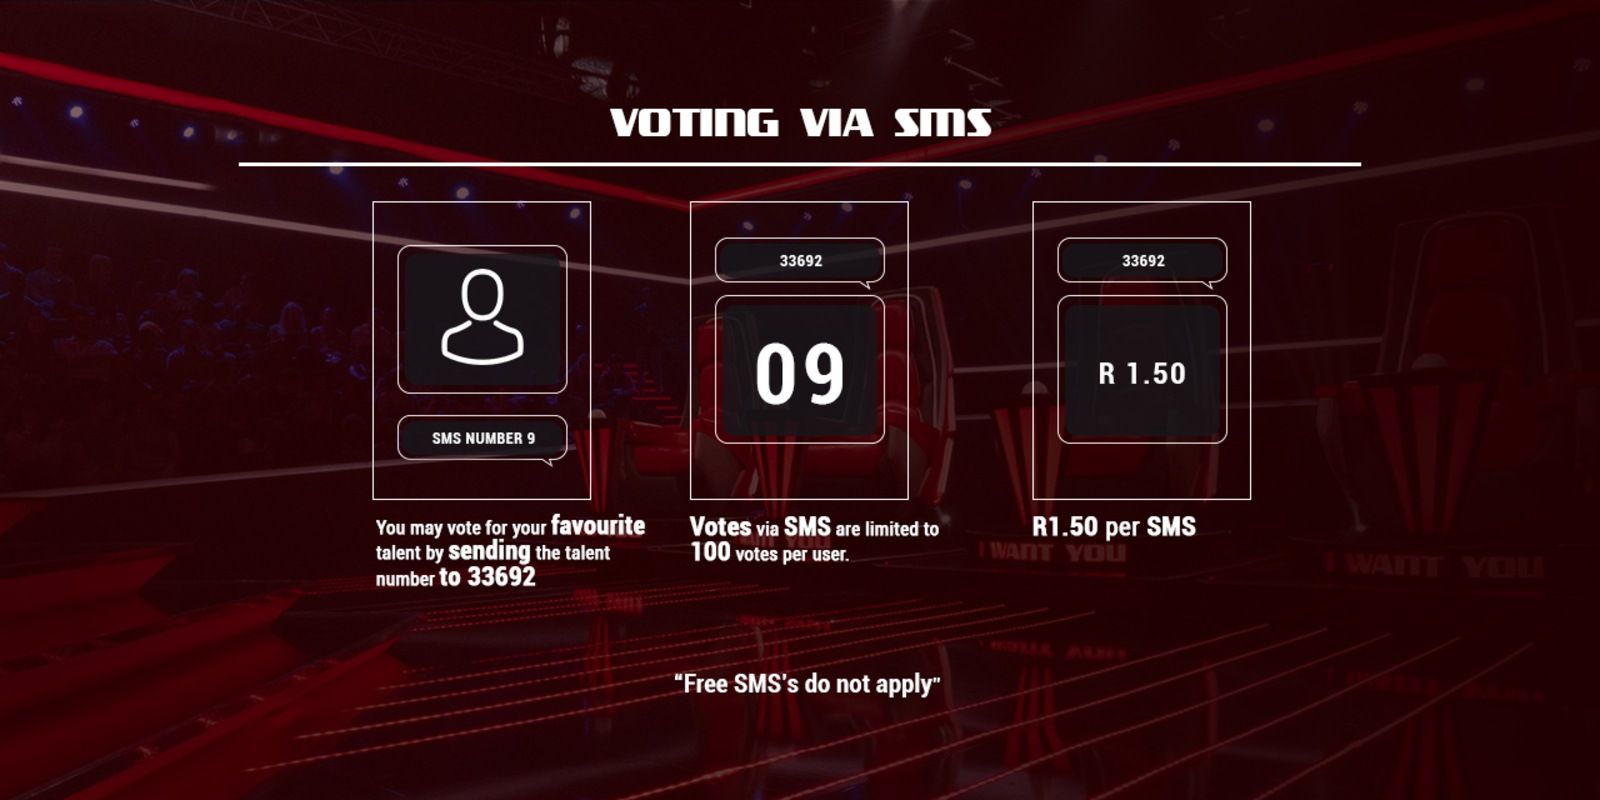 1554121708 34 how to vote vai sms billboard 1600 x 640